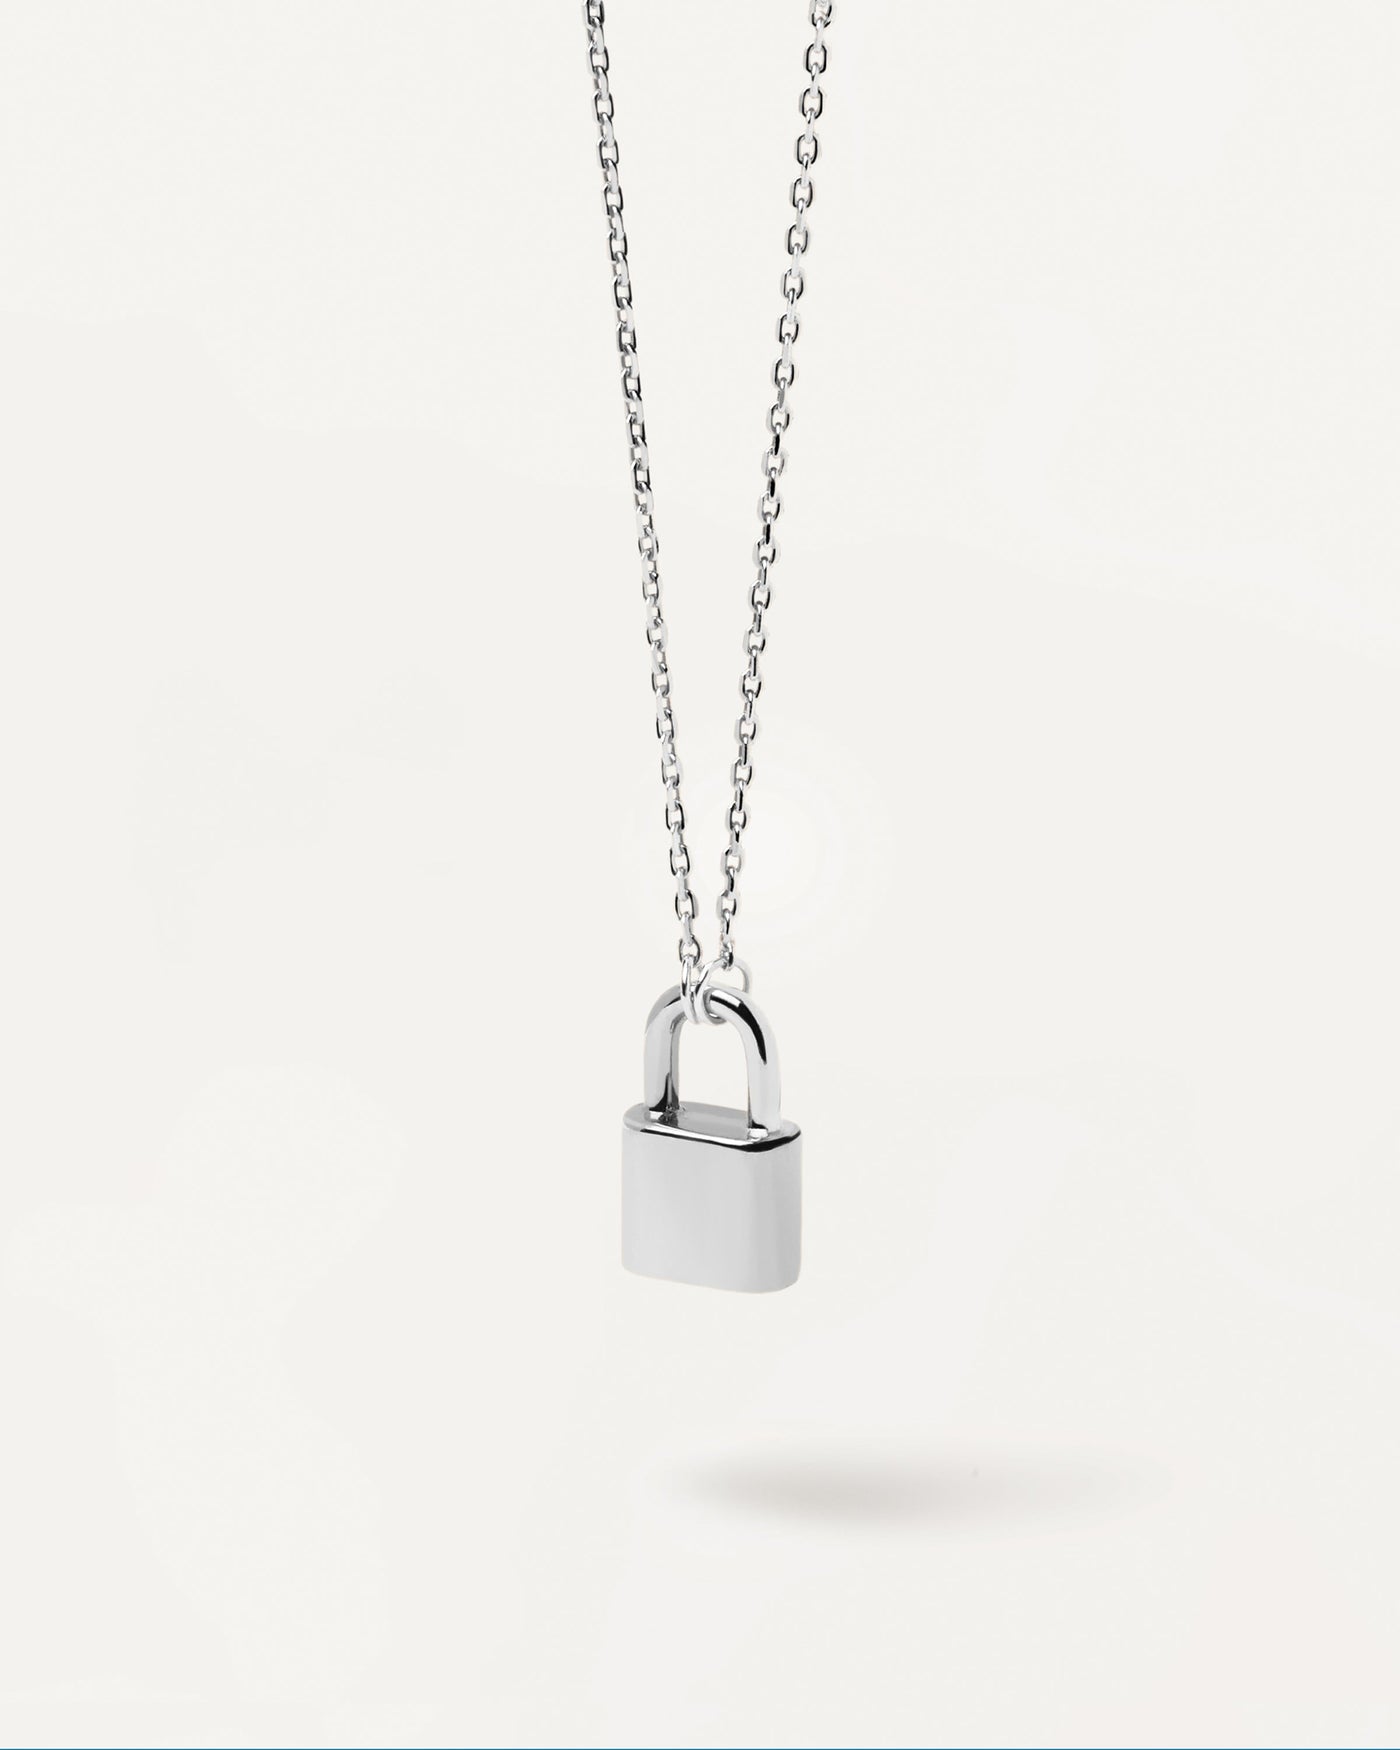 Tiffany & Co. 1837 Lock Padlock Necklace Pendant Sterling Silver 925 | eBay